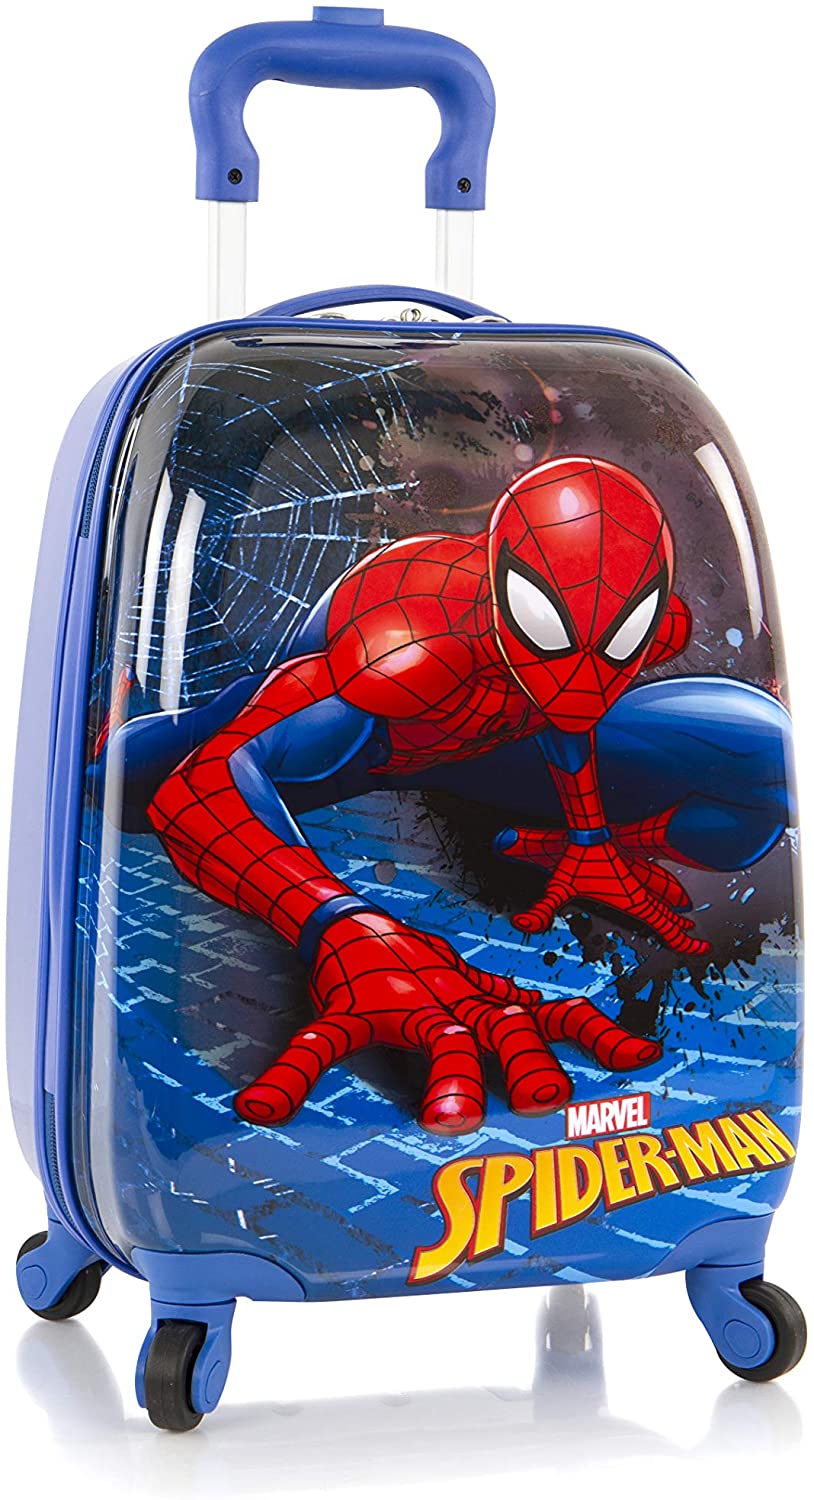 New Marvel Spiderman Hardside Spinner Luggage for Kids - 18 Inch [ Spider-Man ] - image 1 of 4